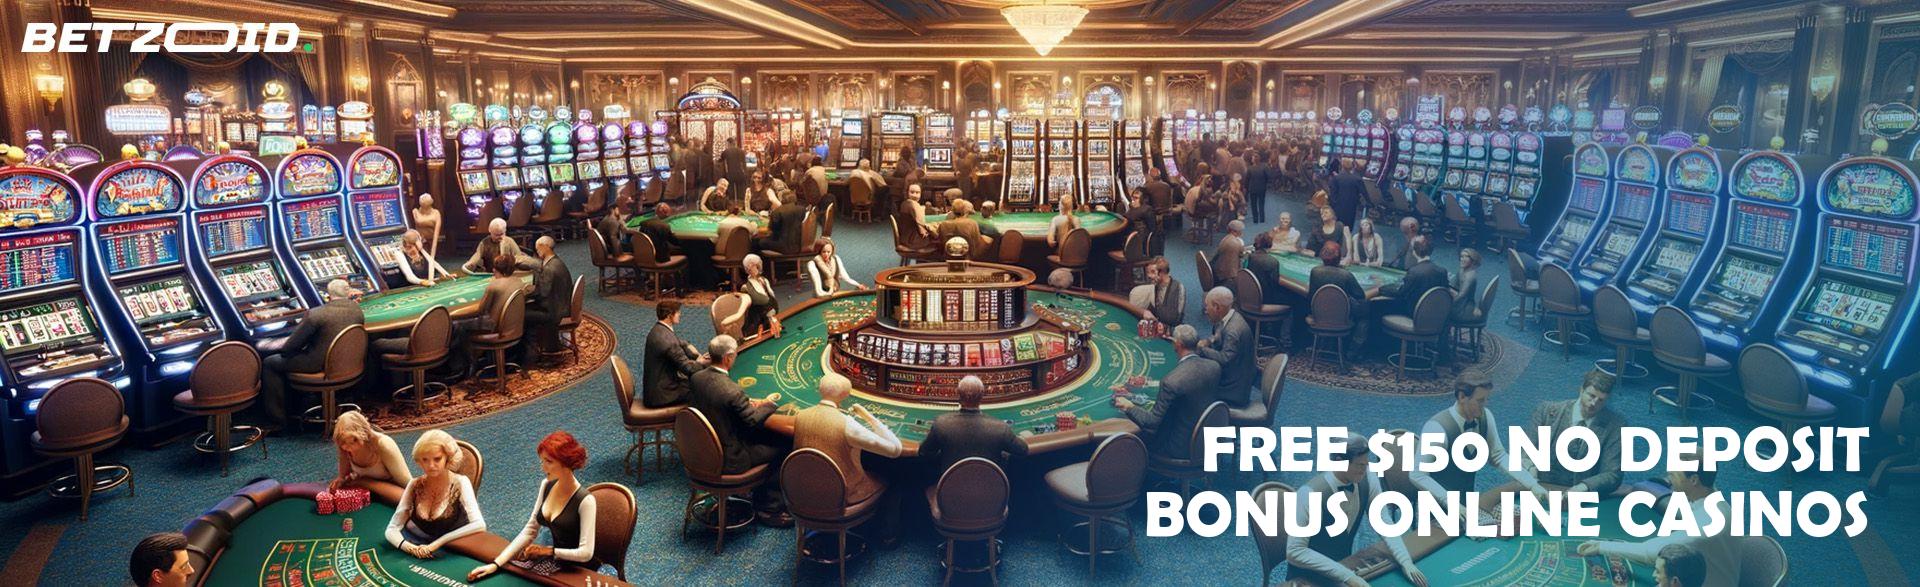 Free $150 No Deposit Bonus Online Casinos.